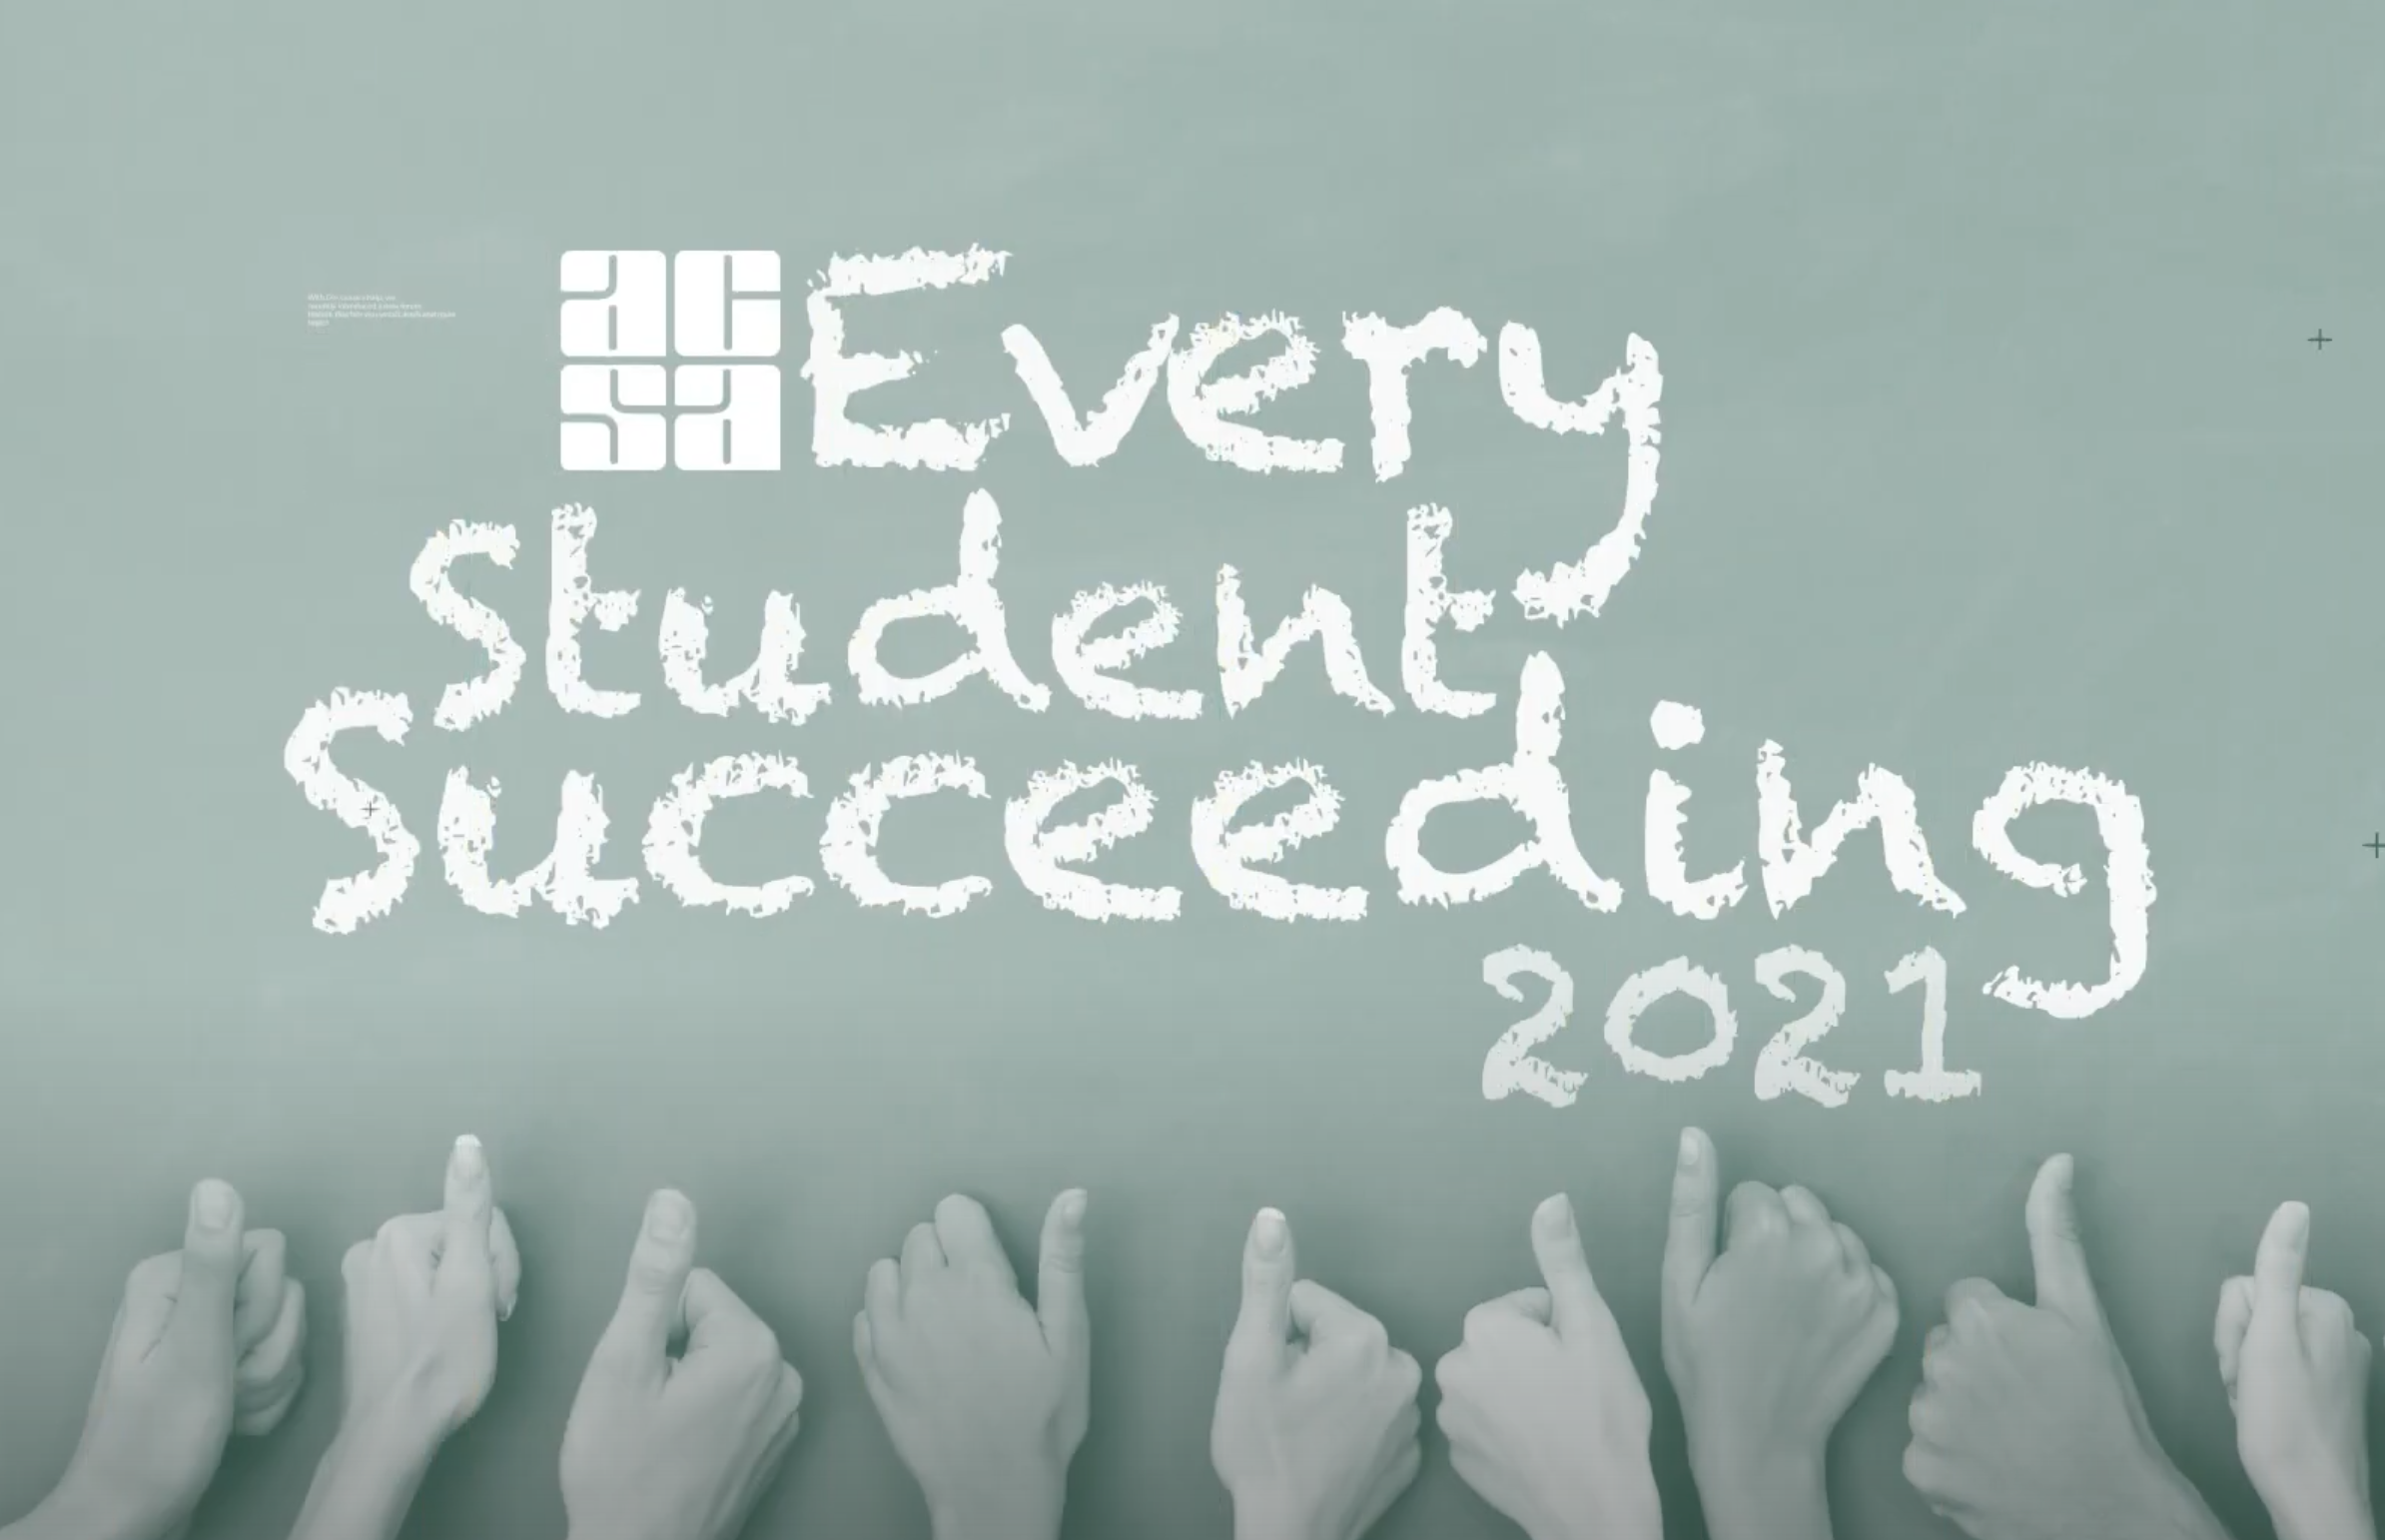 Every Student Succeeding logo